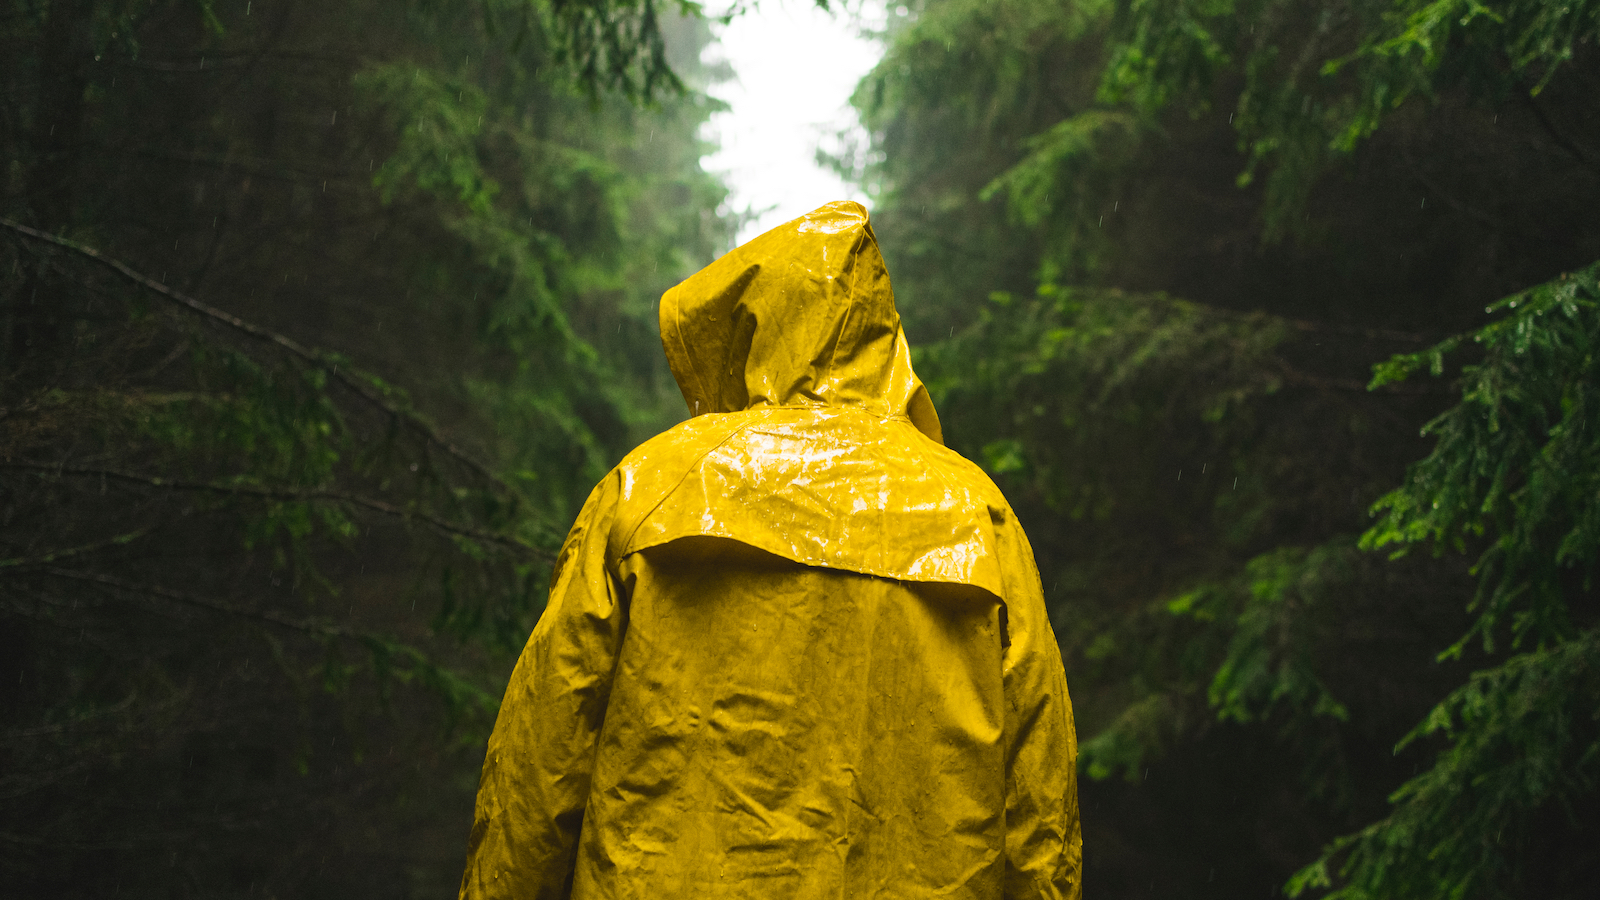 Someone wearing a yellow rain jacket walks in the woods